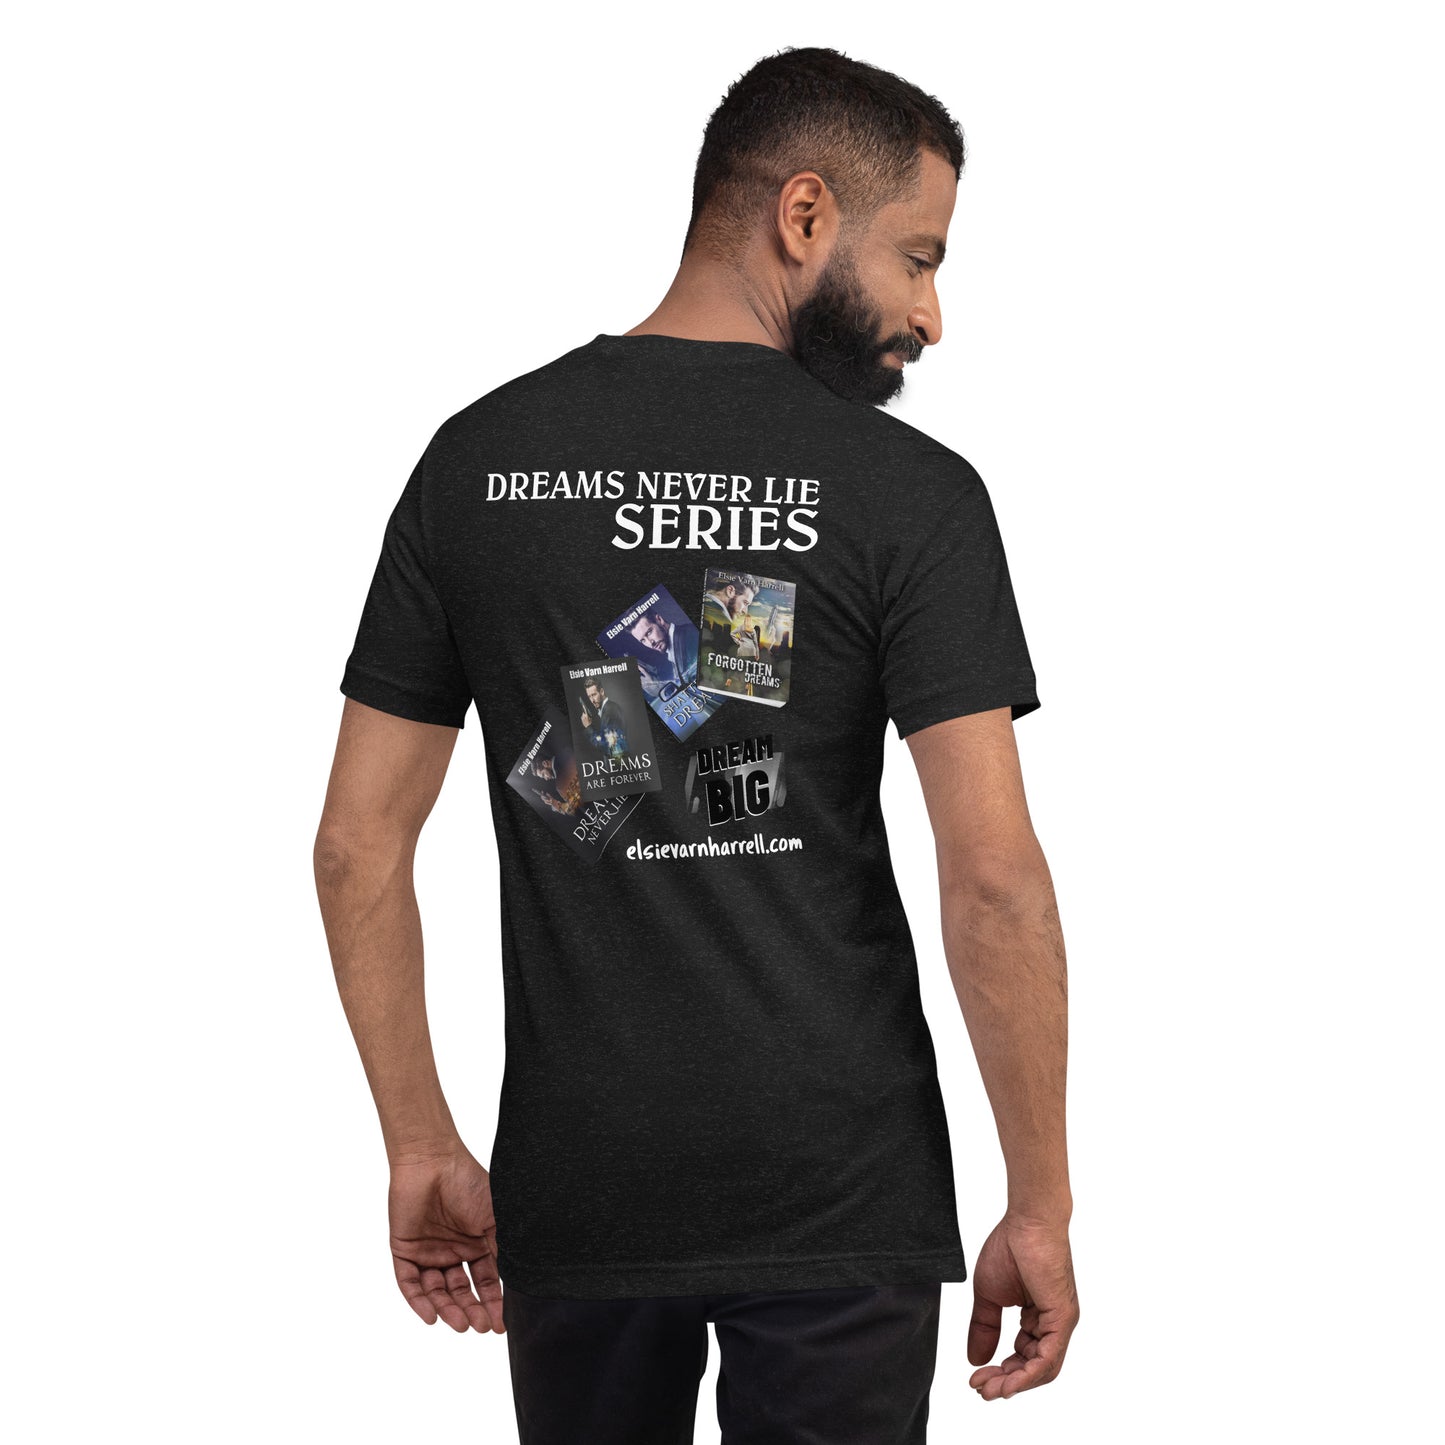 Dream Big Unisex T-Shirt